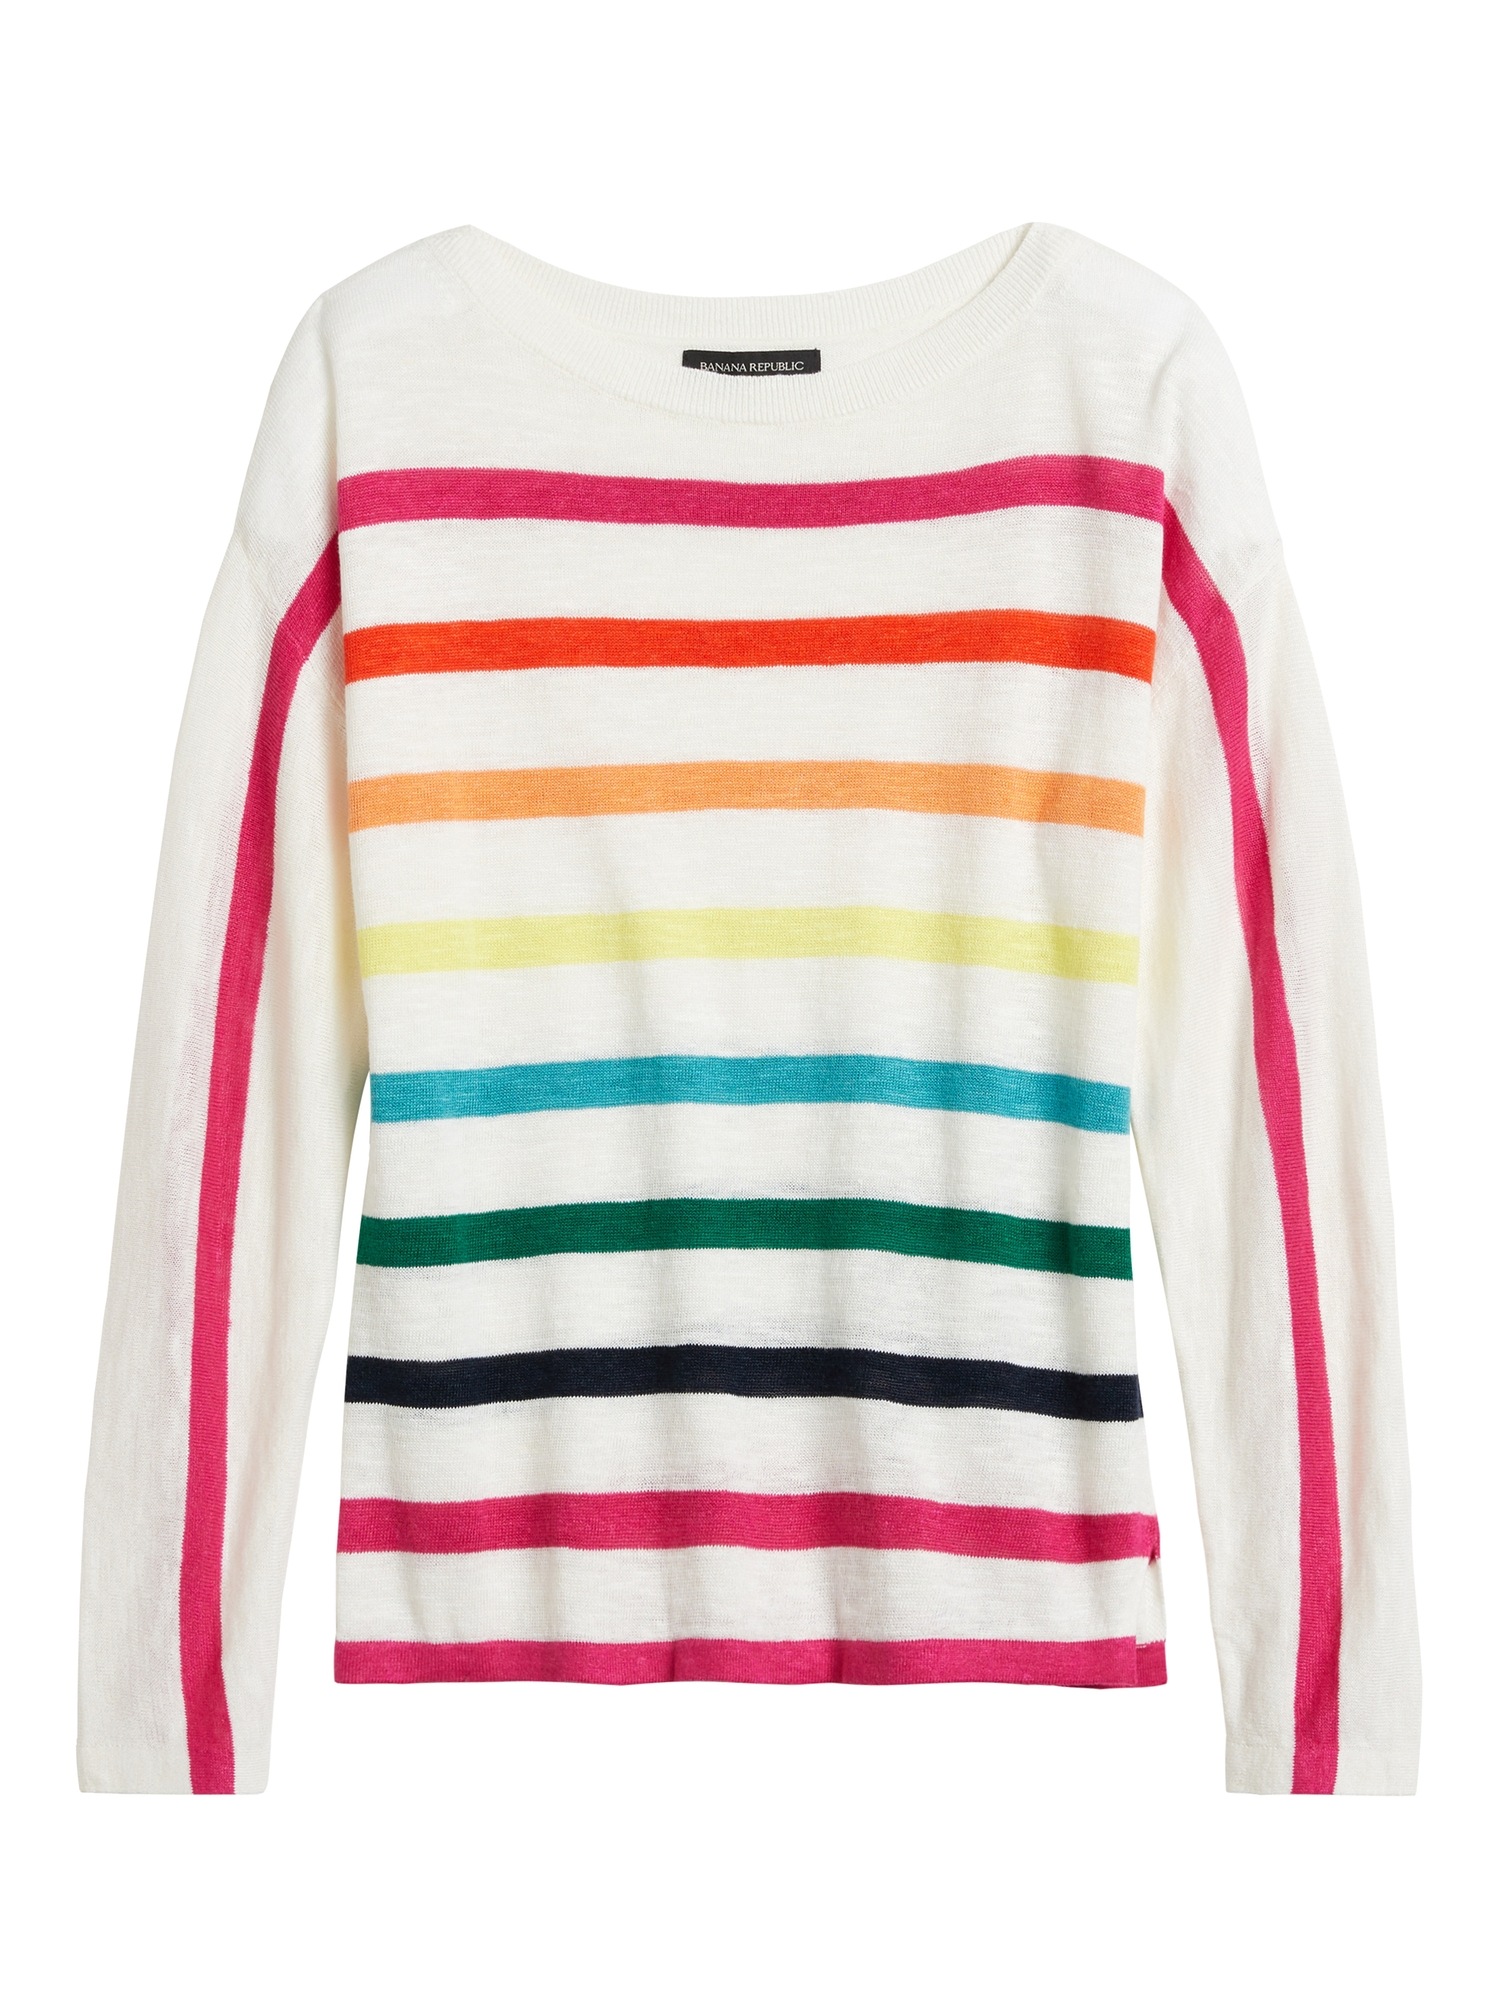 Pride Rainbow Stripe Sweater (Women's Sizes)